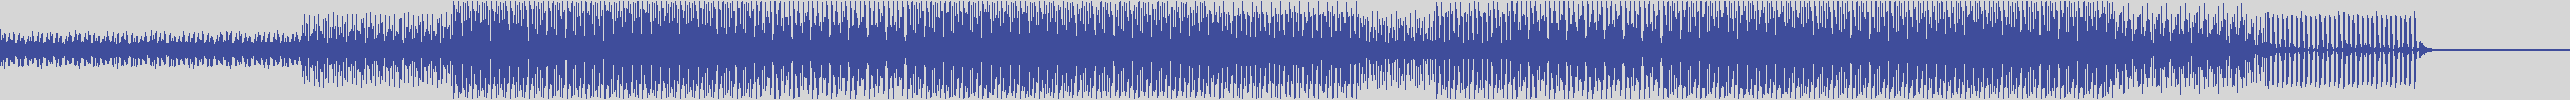 nf_boyz_records [NFY015] Natan Banta - Only One [Tribal Edit] audio wave form